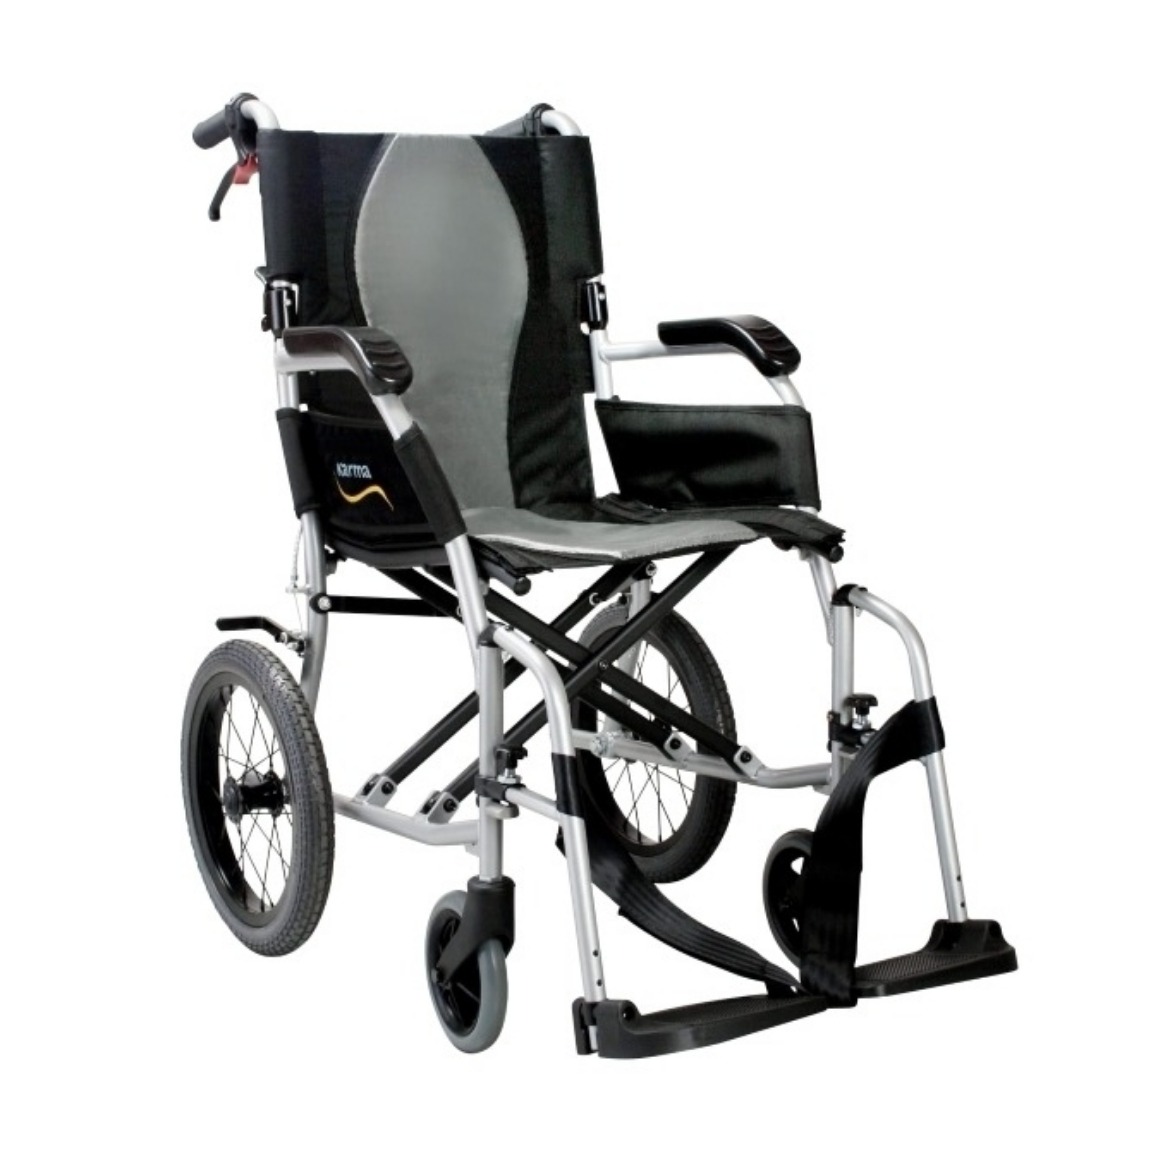 Ergo Lite 2 Ultralight Transit Wheelchair Motability Offer